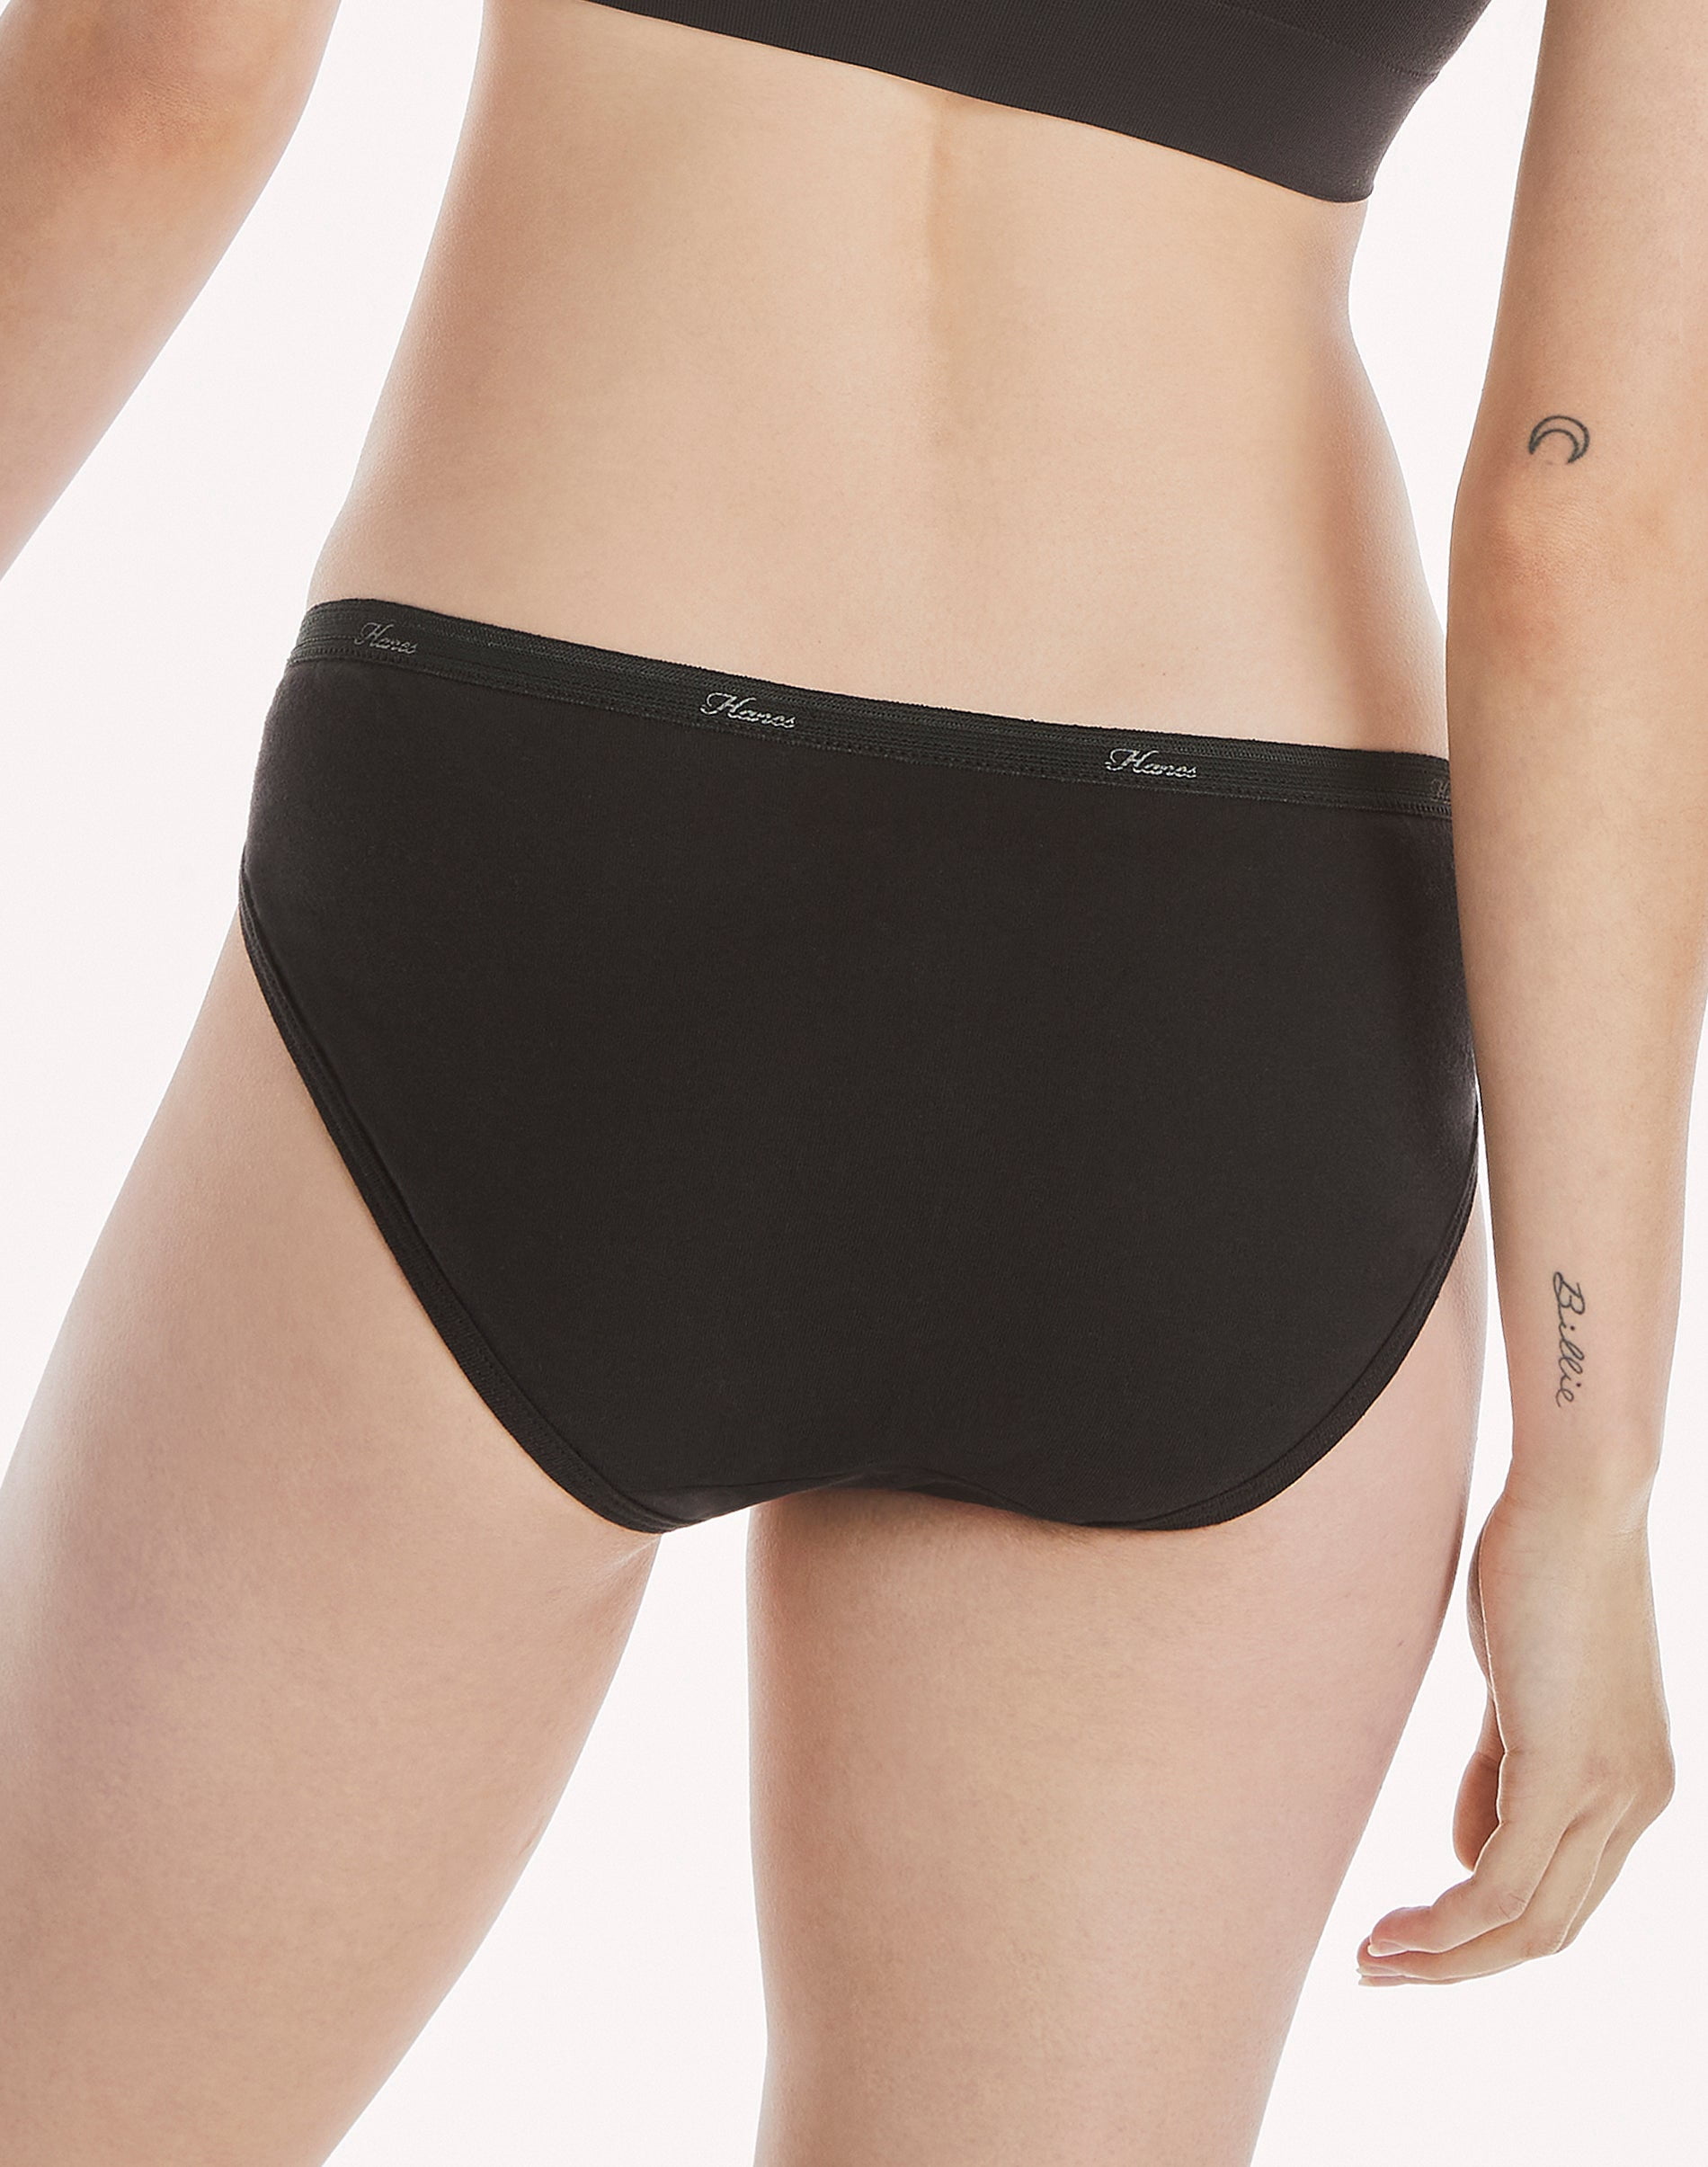 Hanes Women's Breathable Cotton Bikini Underwear, Black, 10-Pack 2